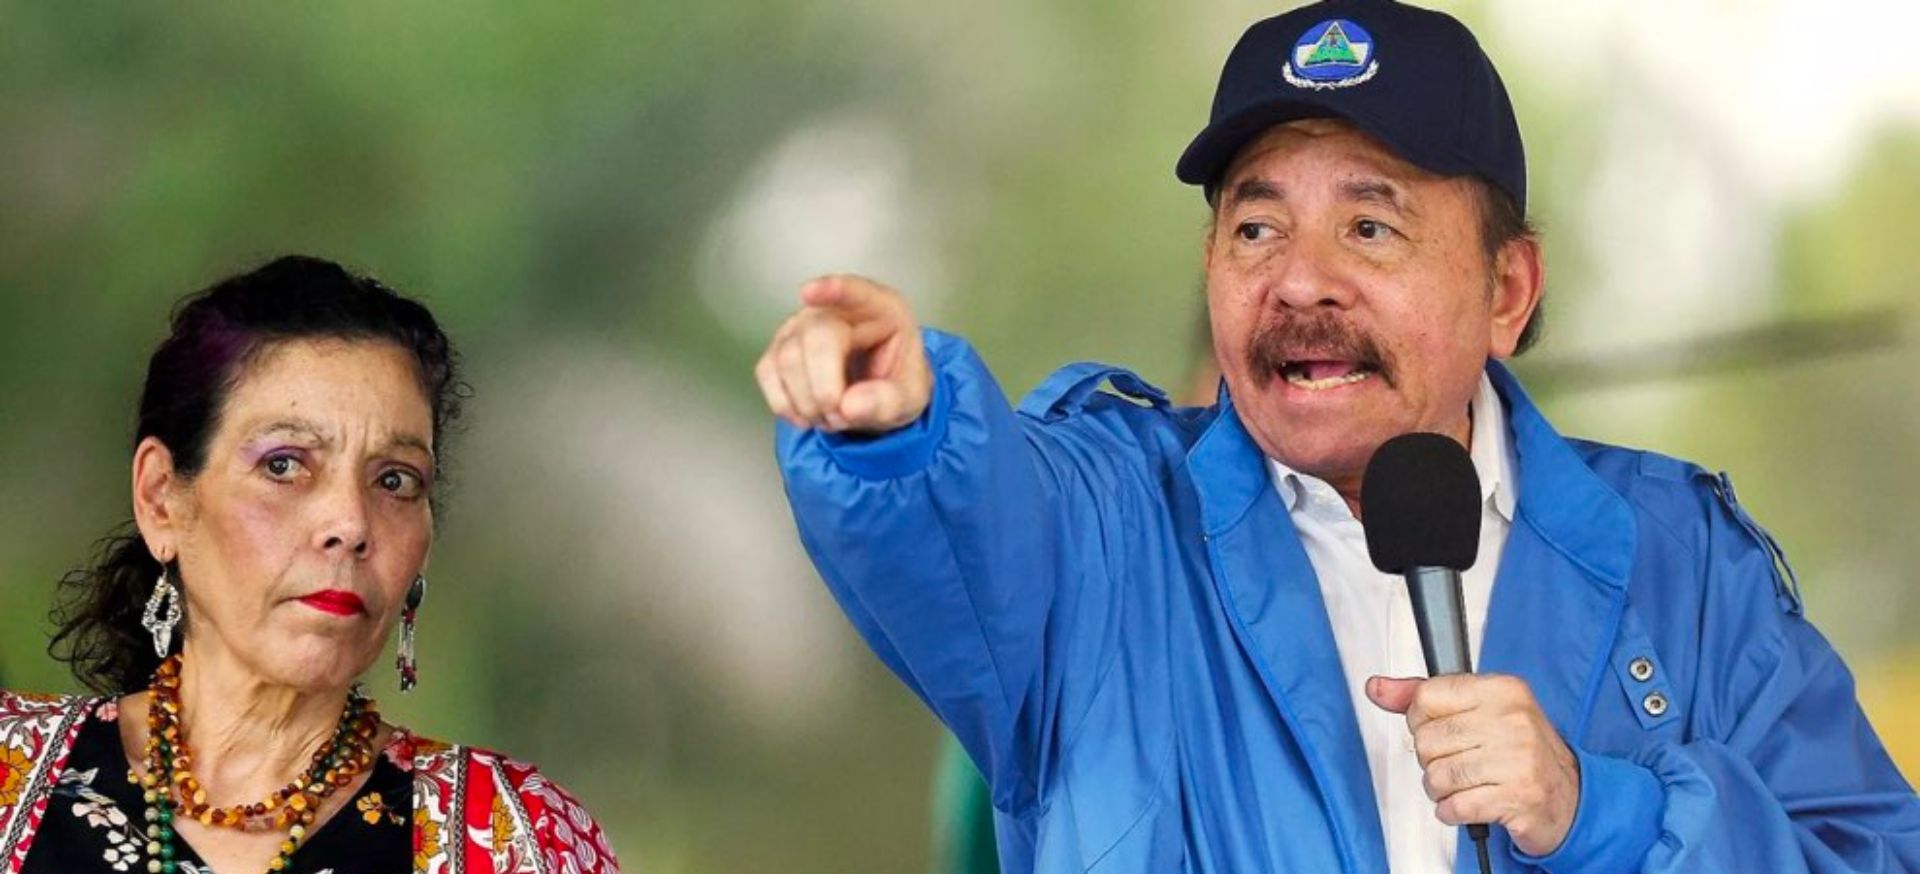 Daniel Ortega chama Igreja Católica de 